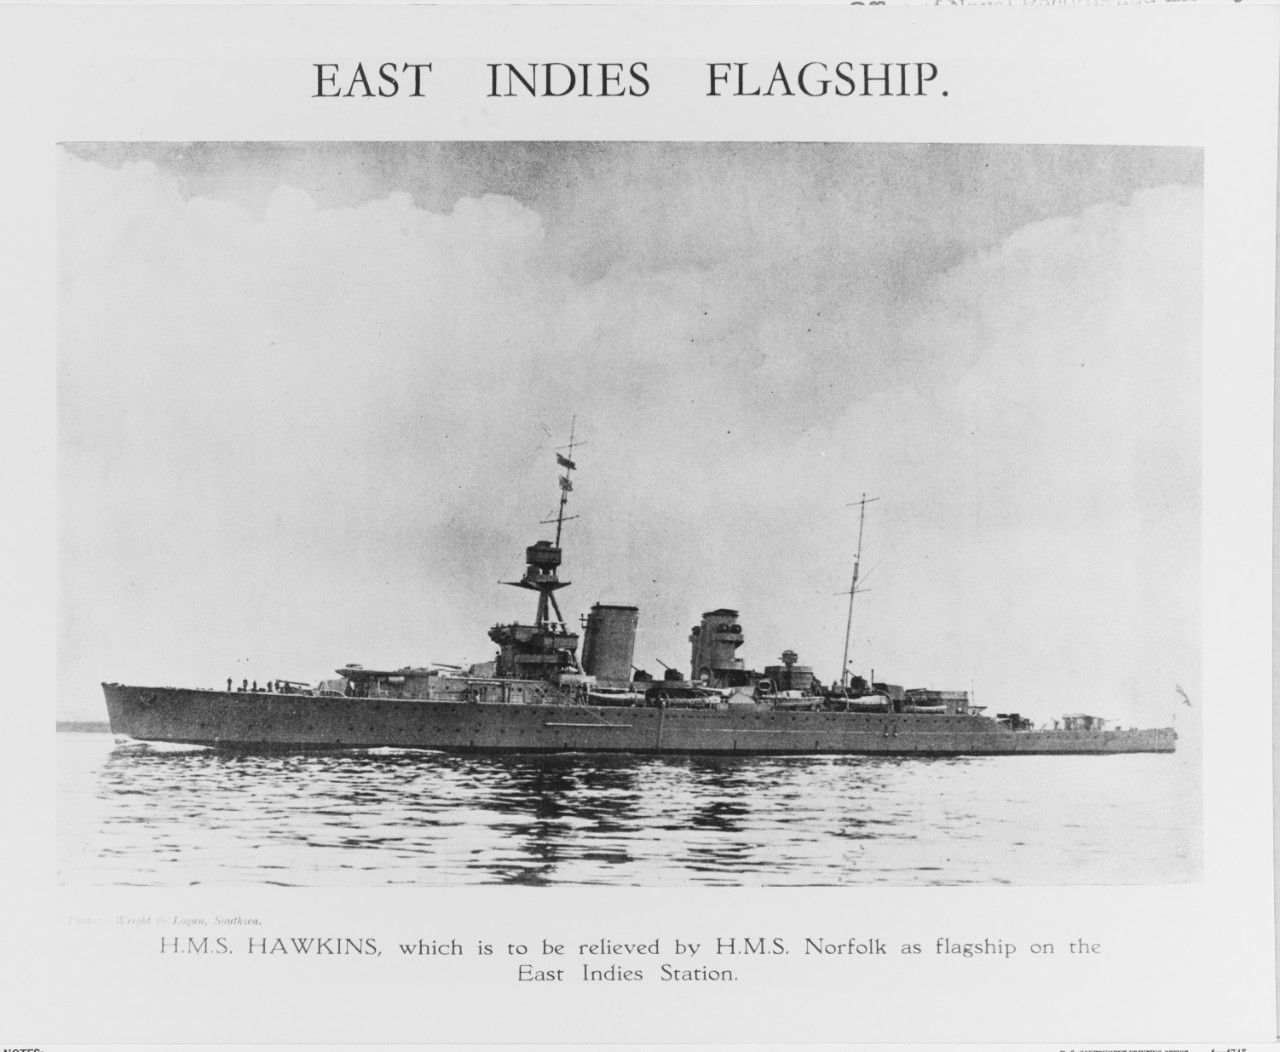 HMS HAWINS (BRITISH CRUISER, 1917)